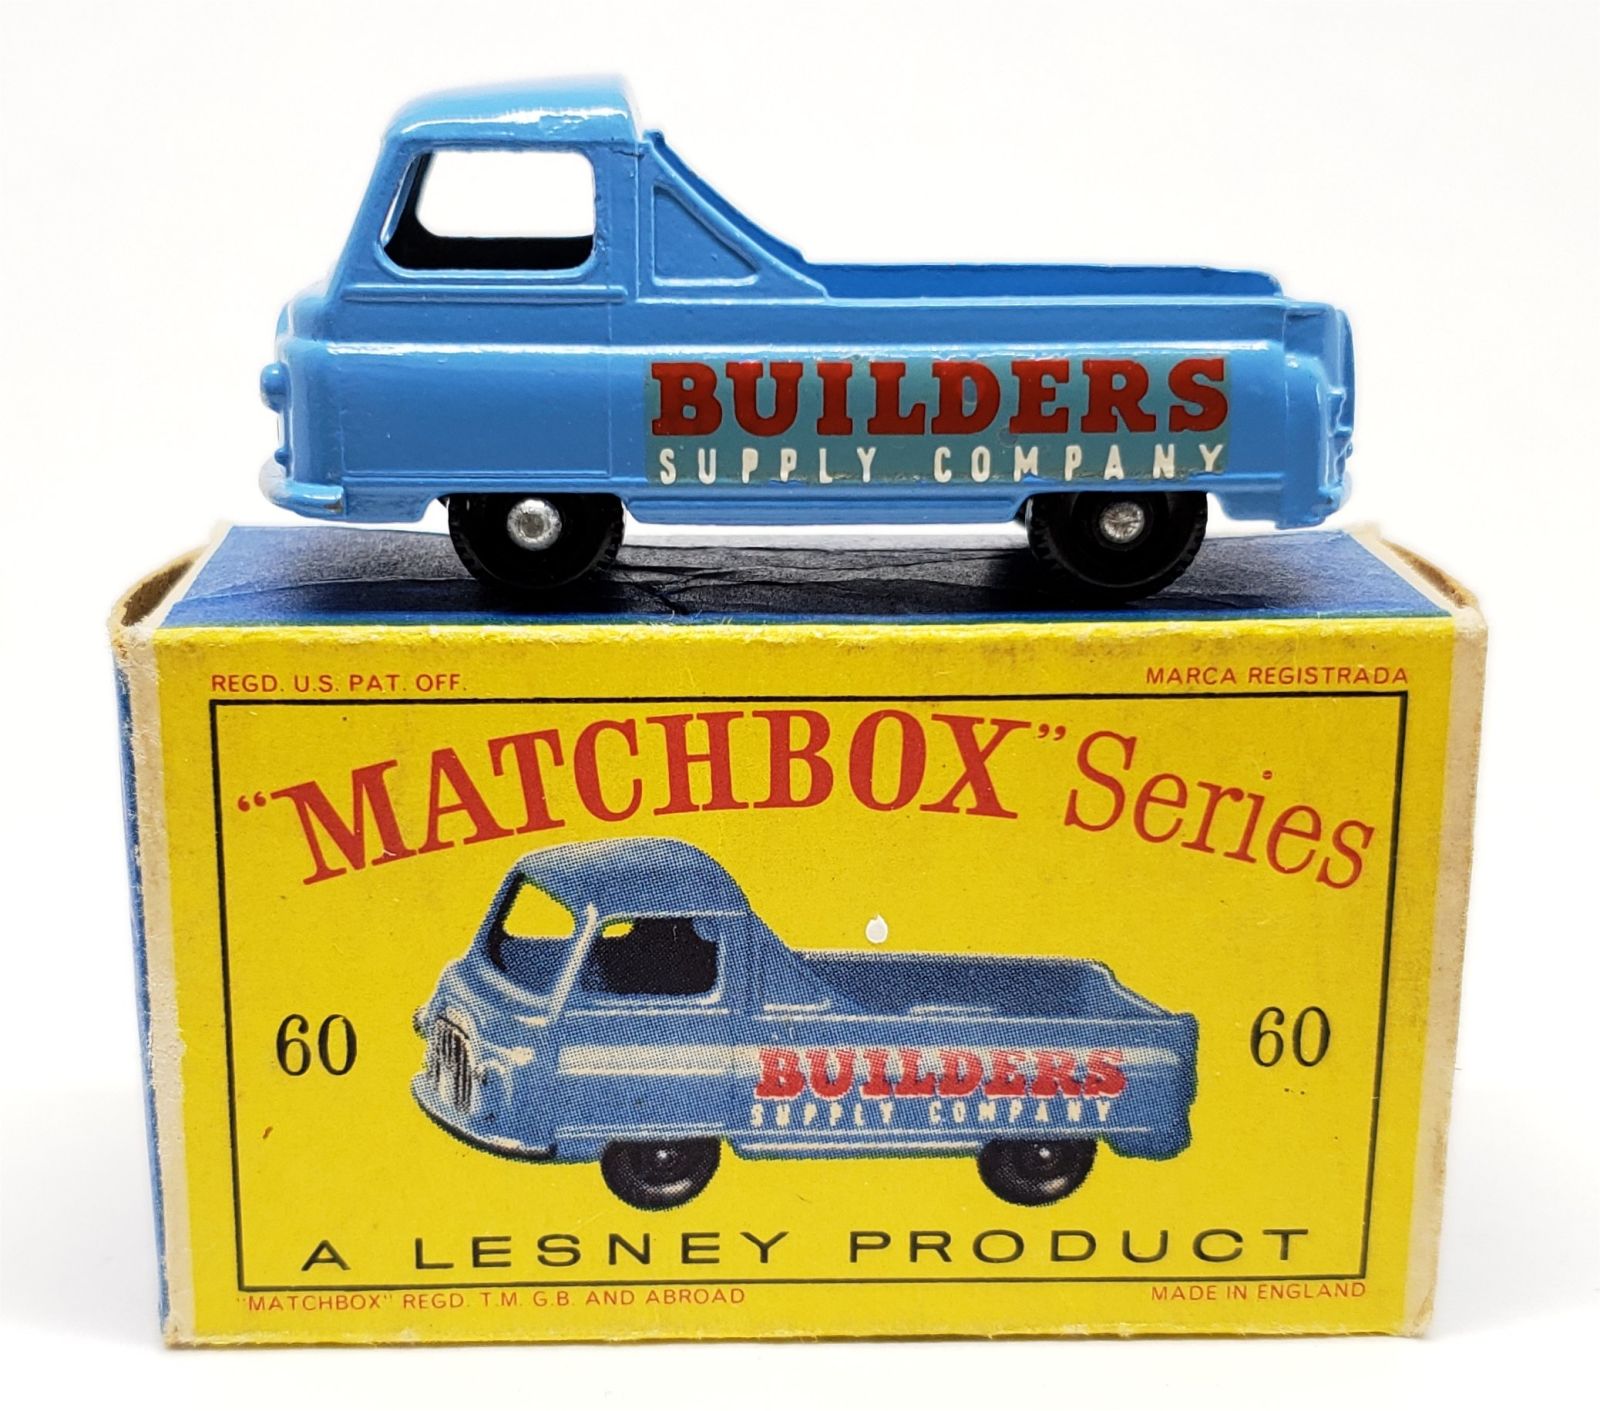 Illustration for article titled [REVIEW] Lesney Matchbox Morris J2 Pick-up